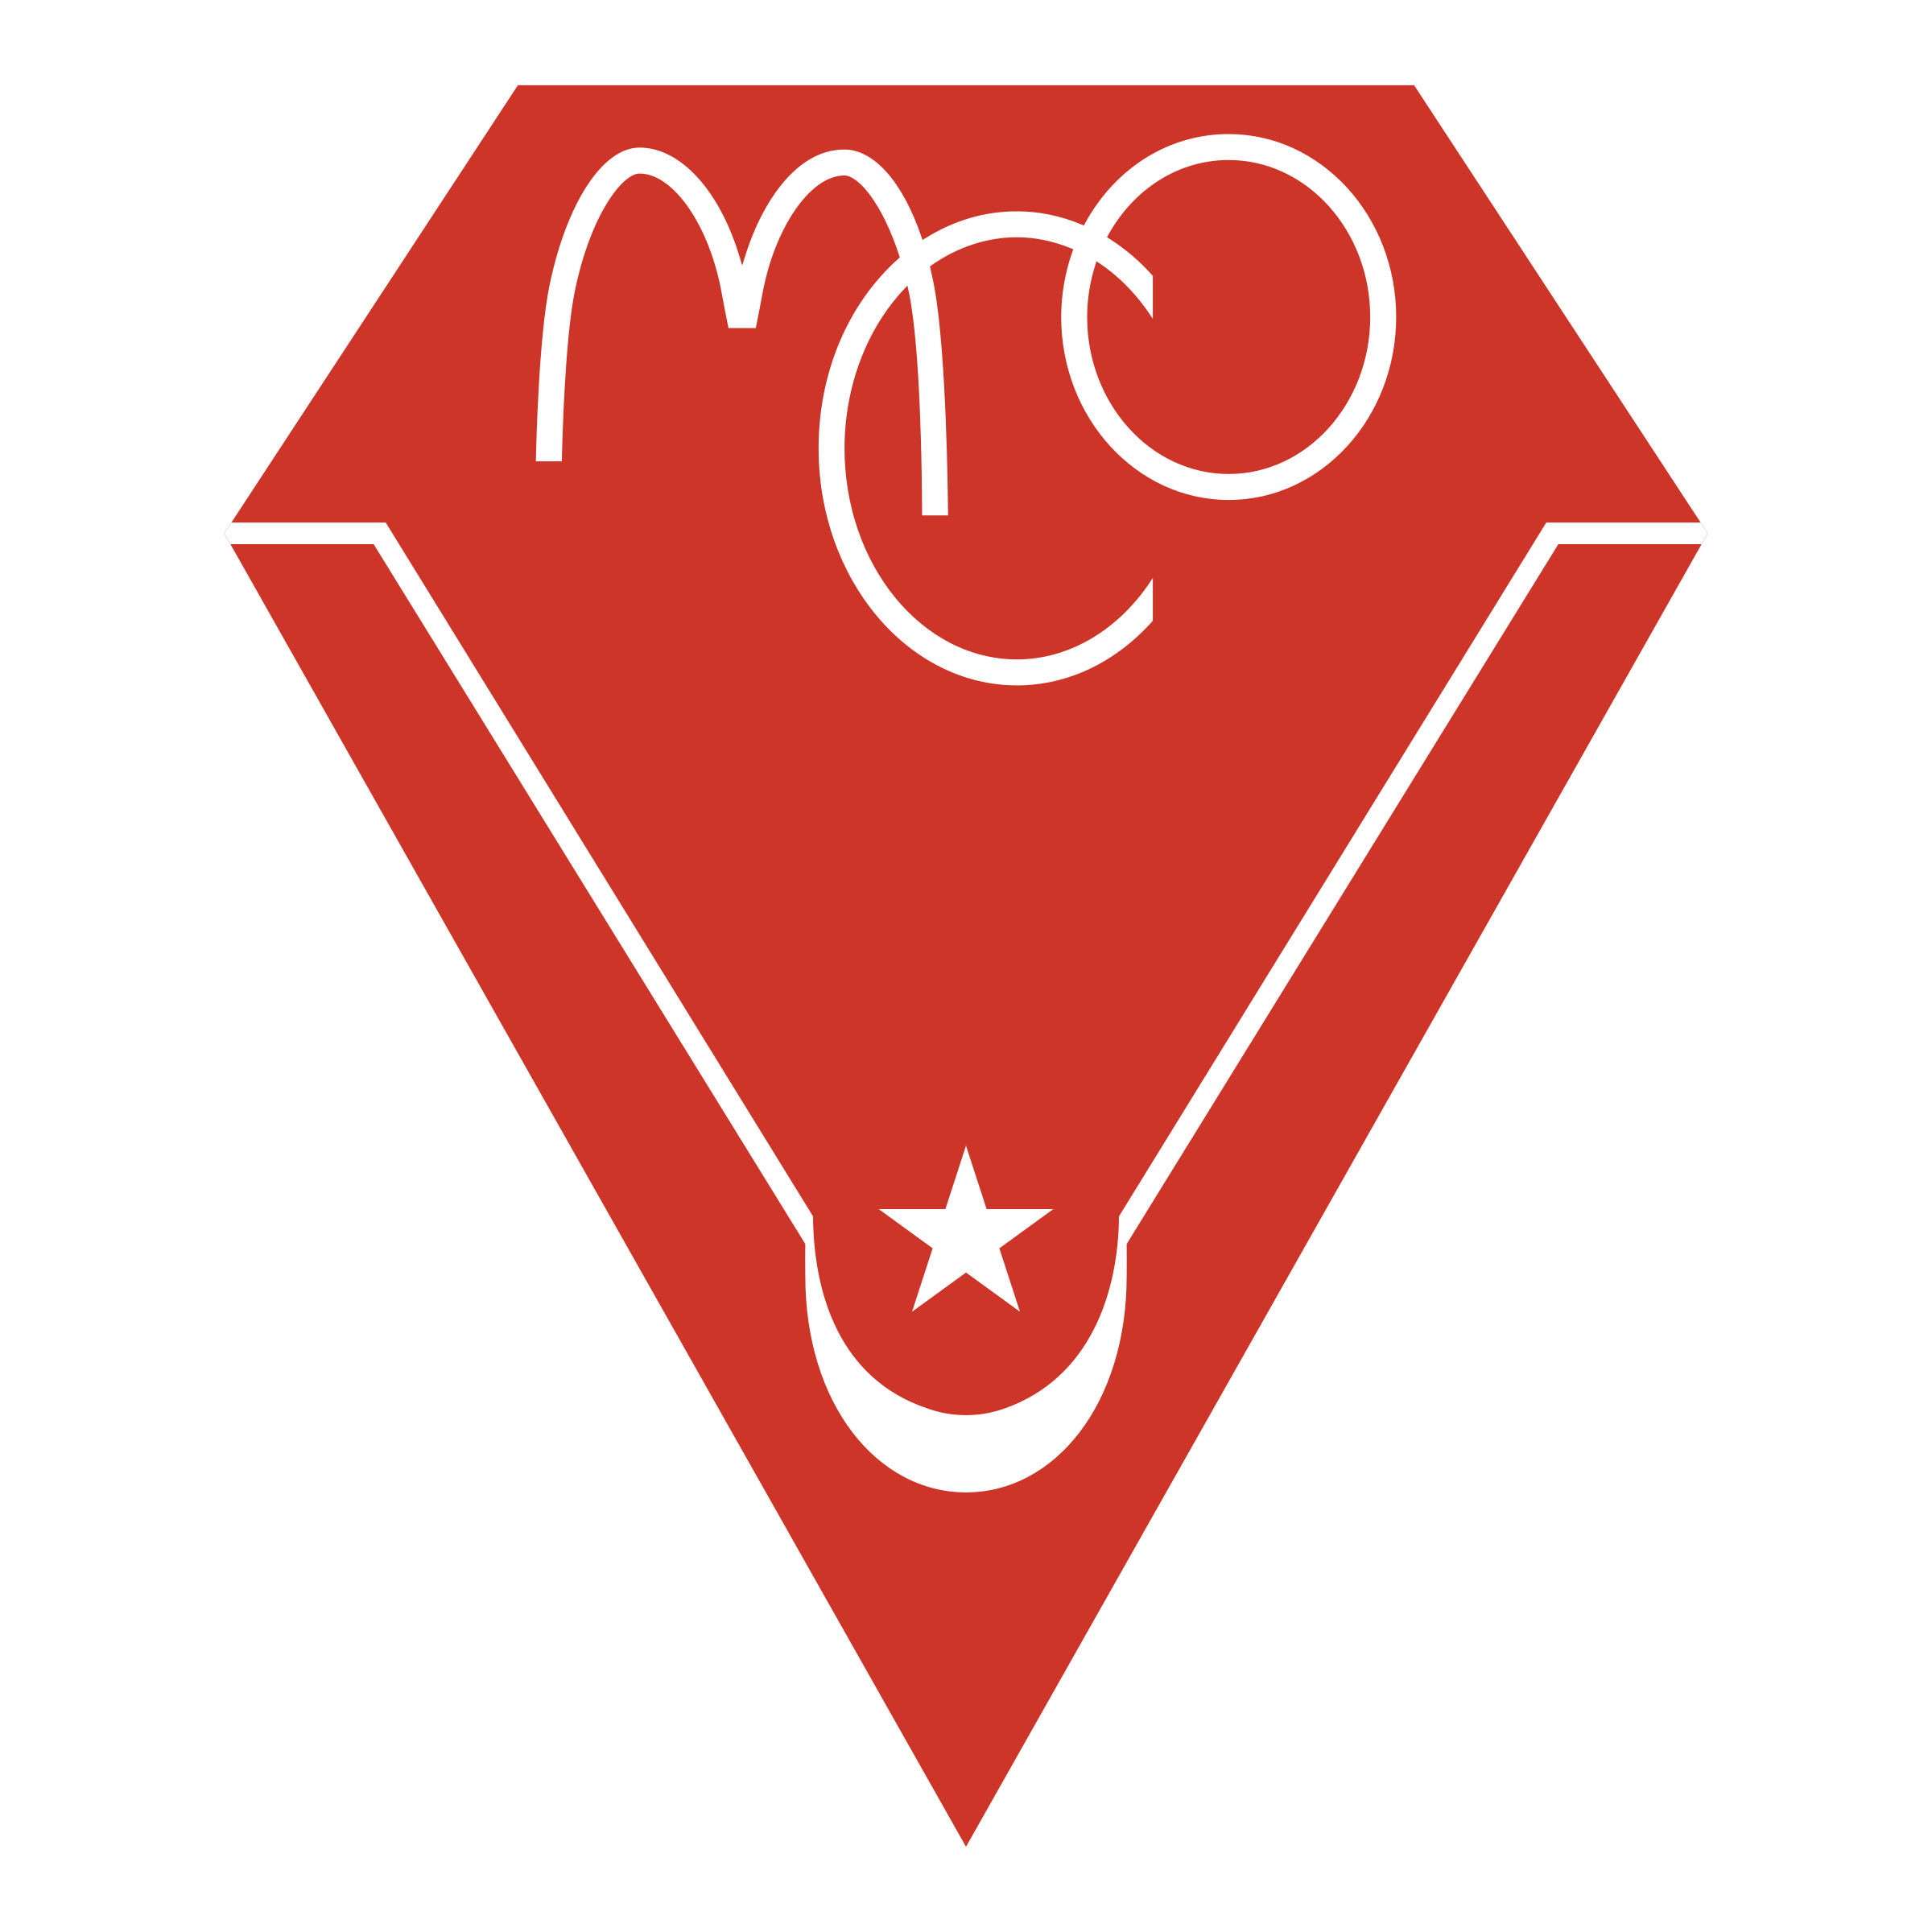 MCO Logo - MCO Logo PNG Transparent & SVG Vector